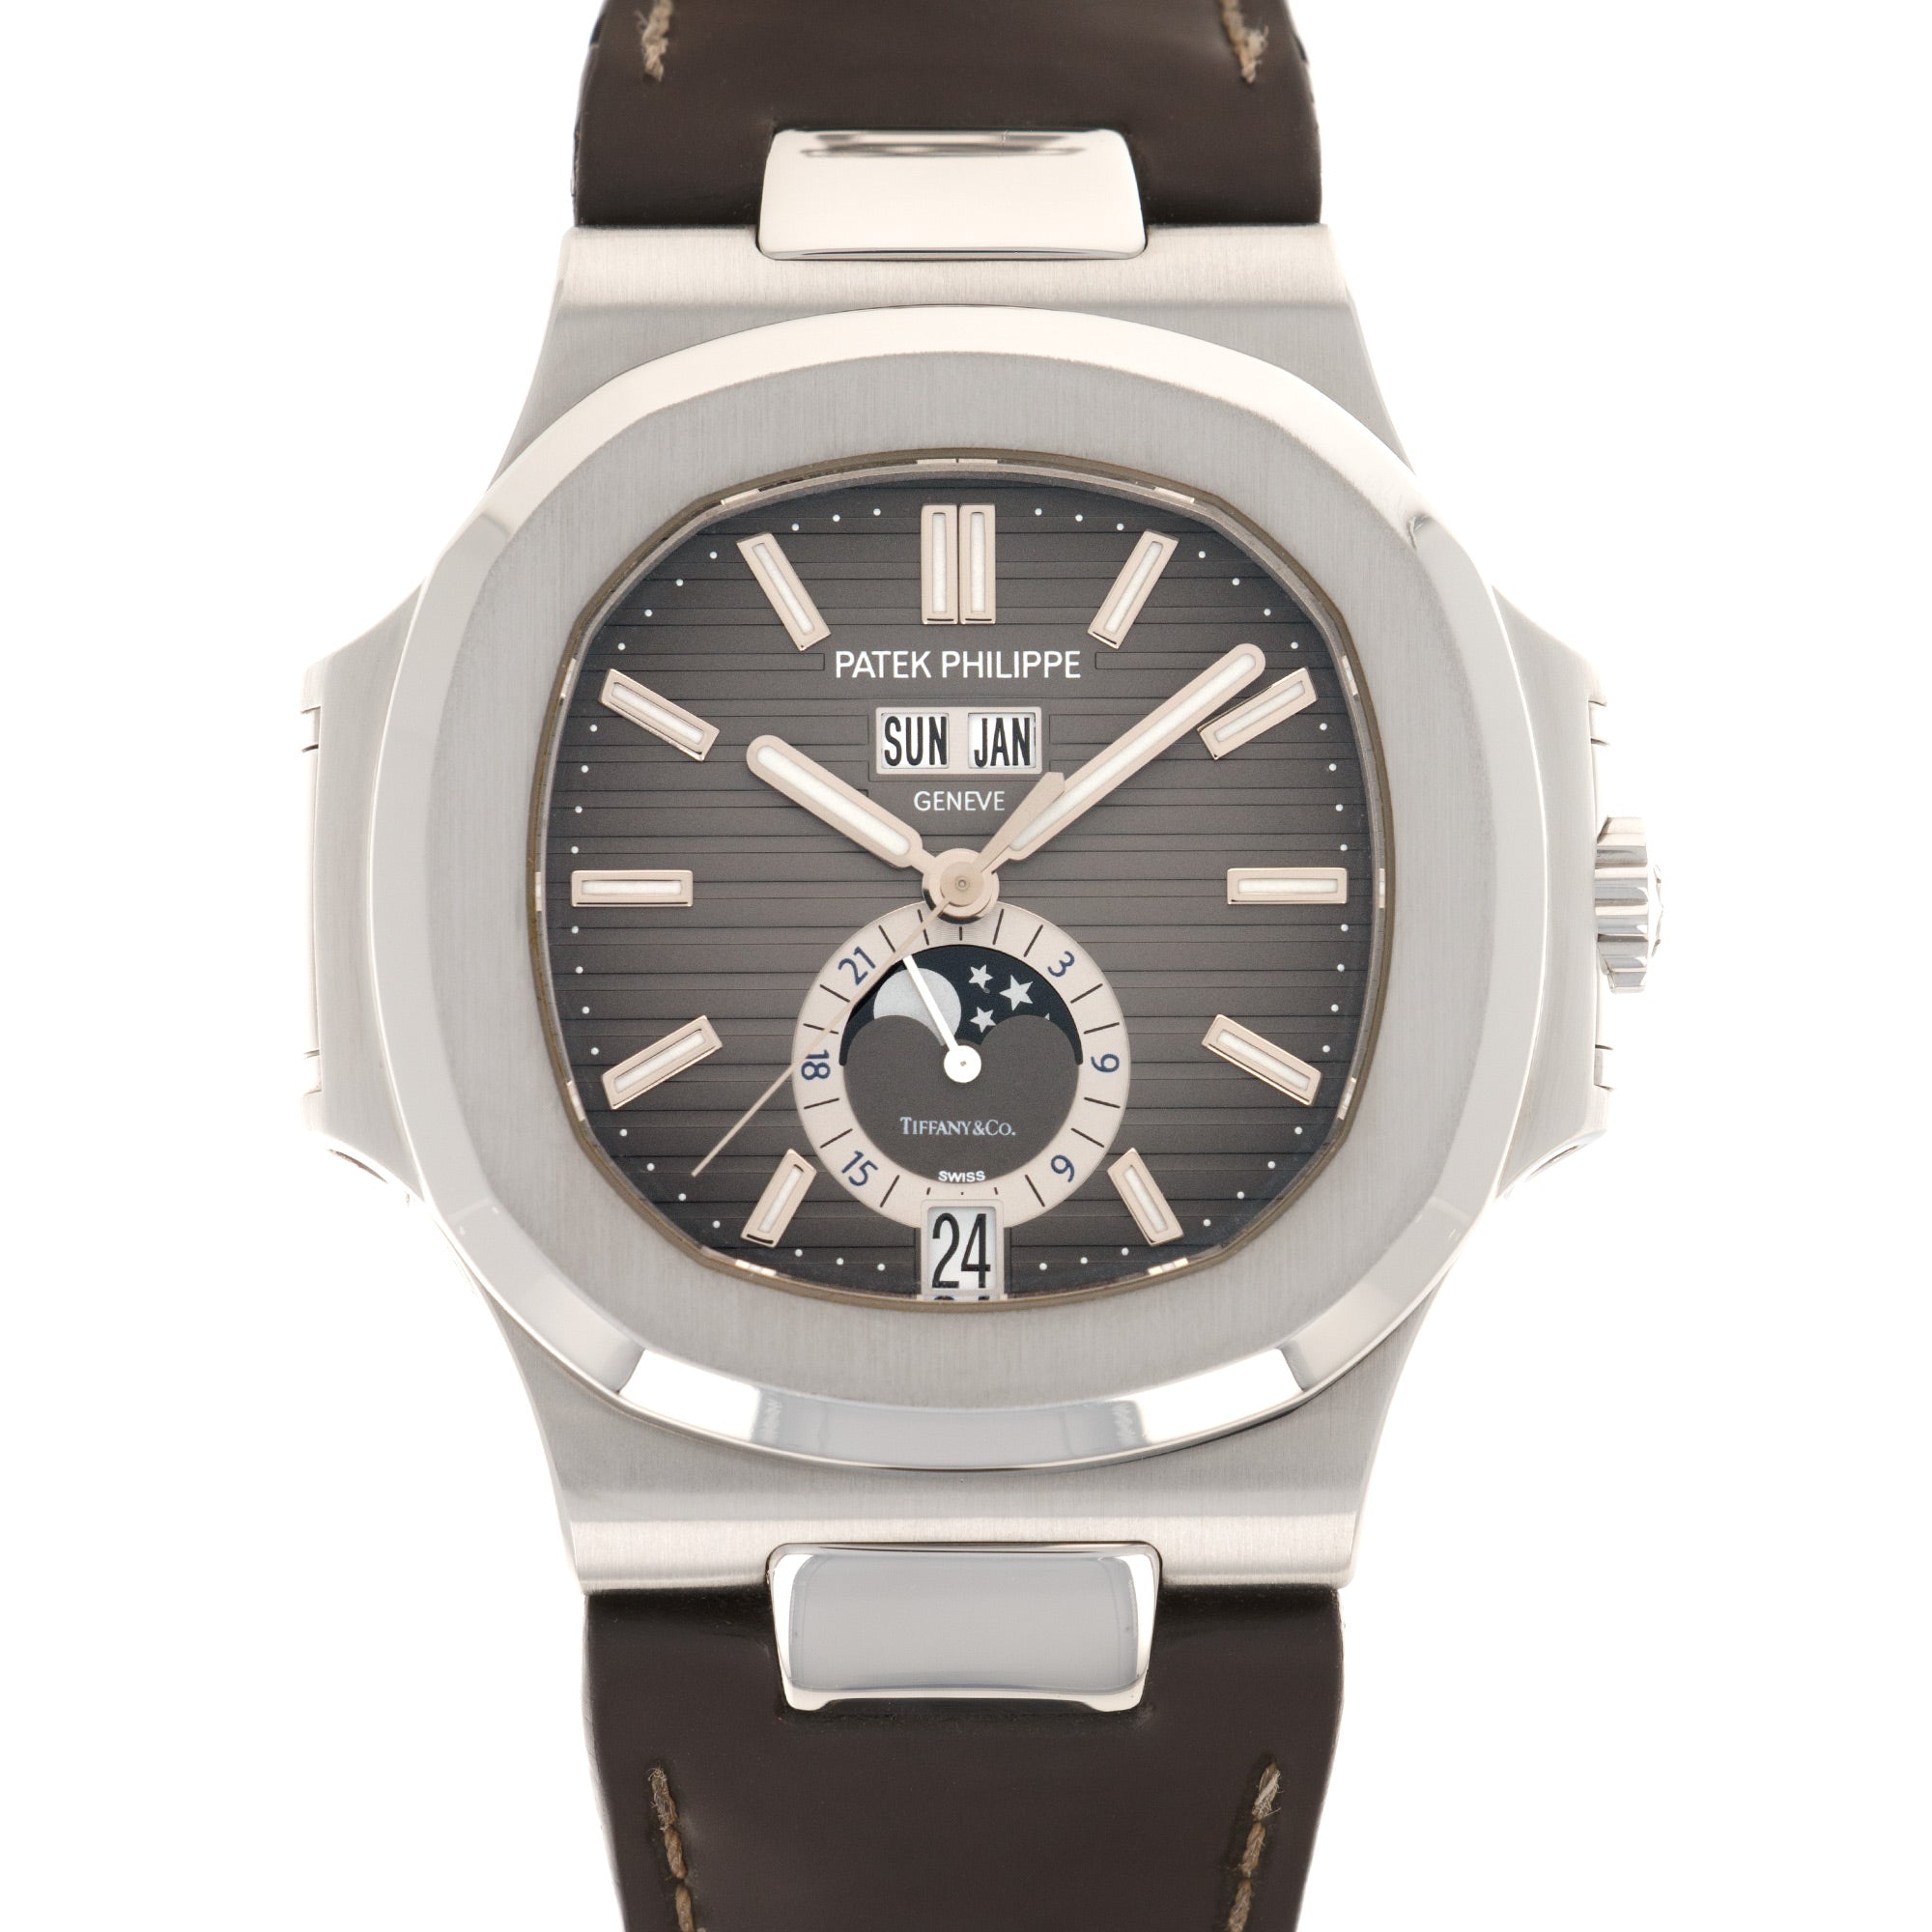 Patek Philippe - Patek Philippe Nautilus Moonphase Calendar Ref. 5726, Retailed by Tiffany & Co. - The Keystone Watches